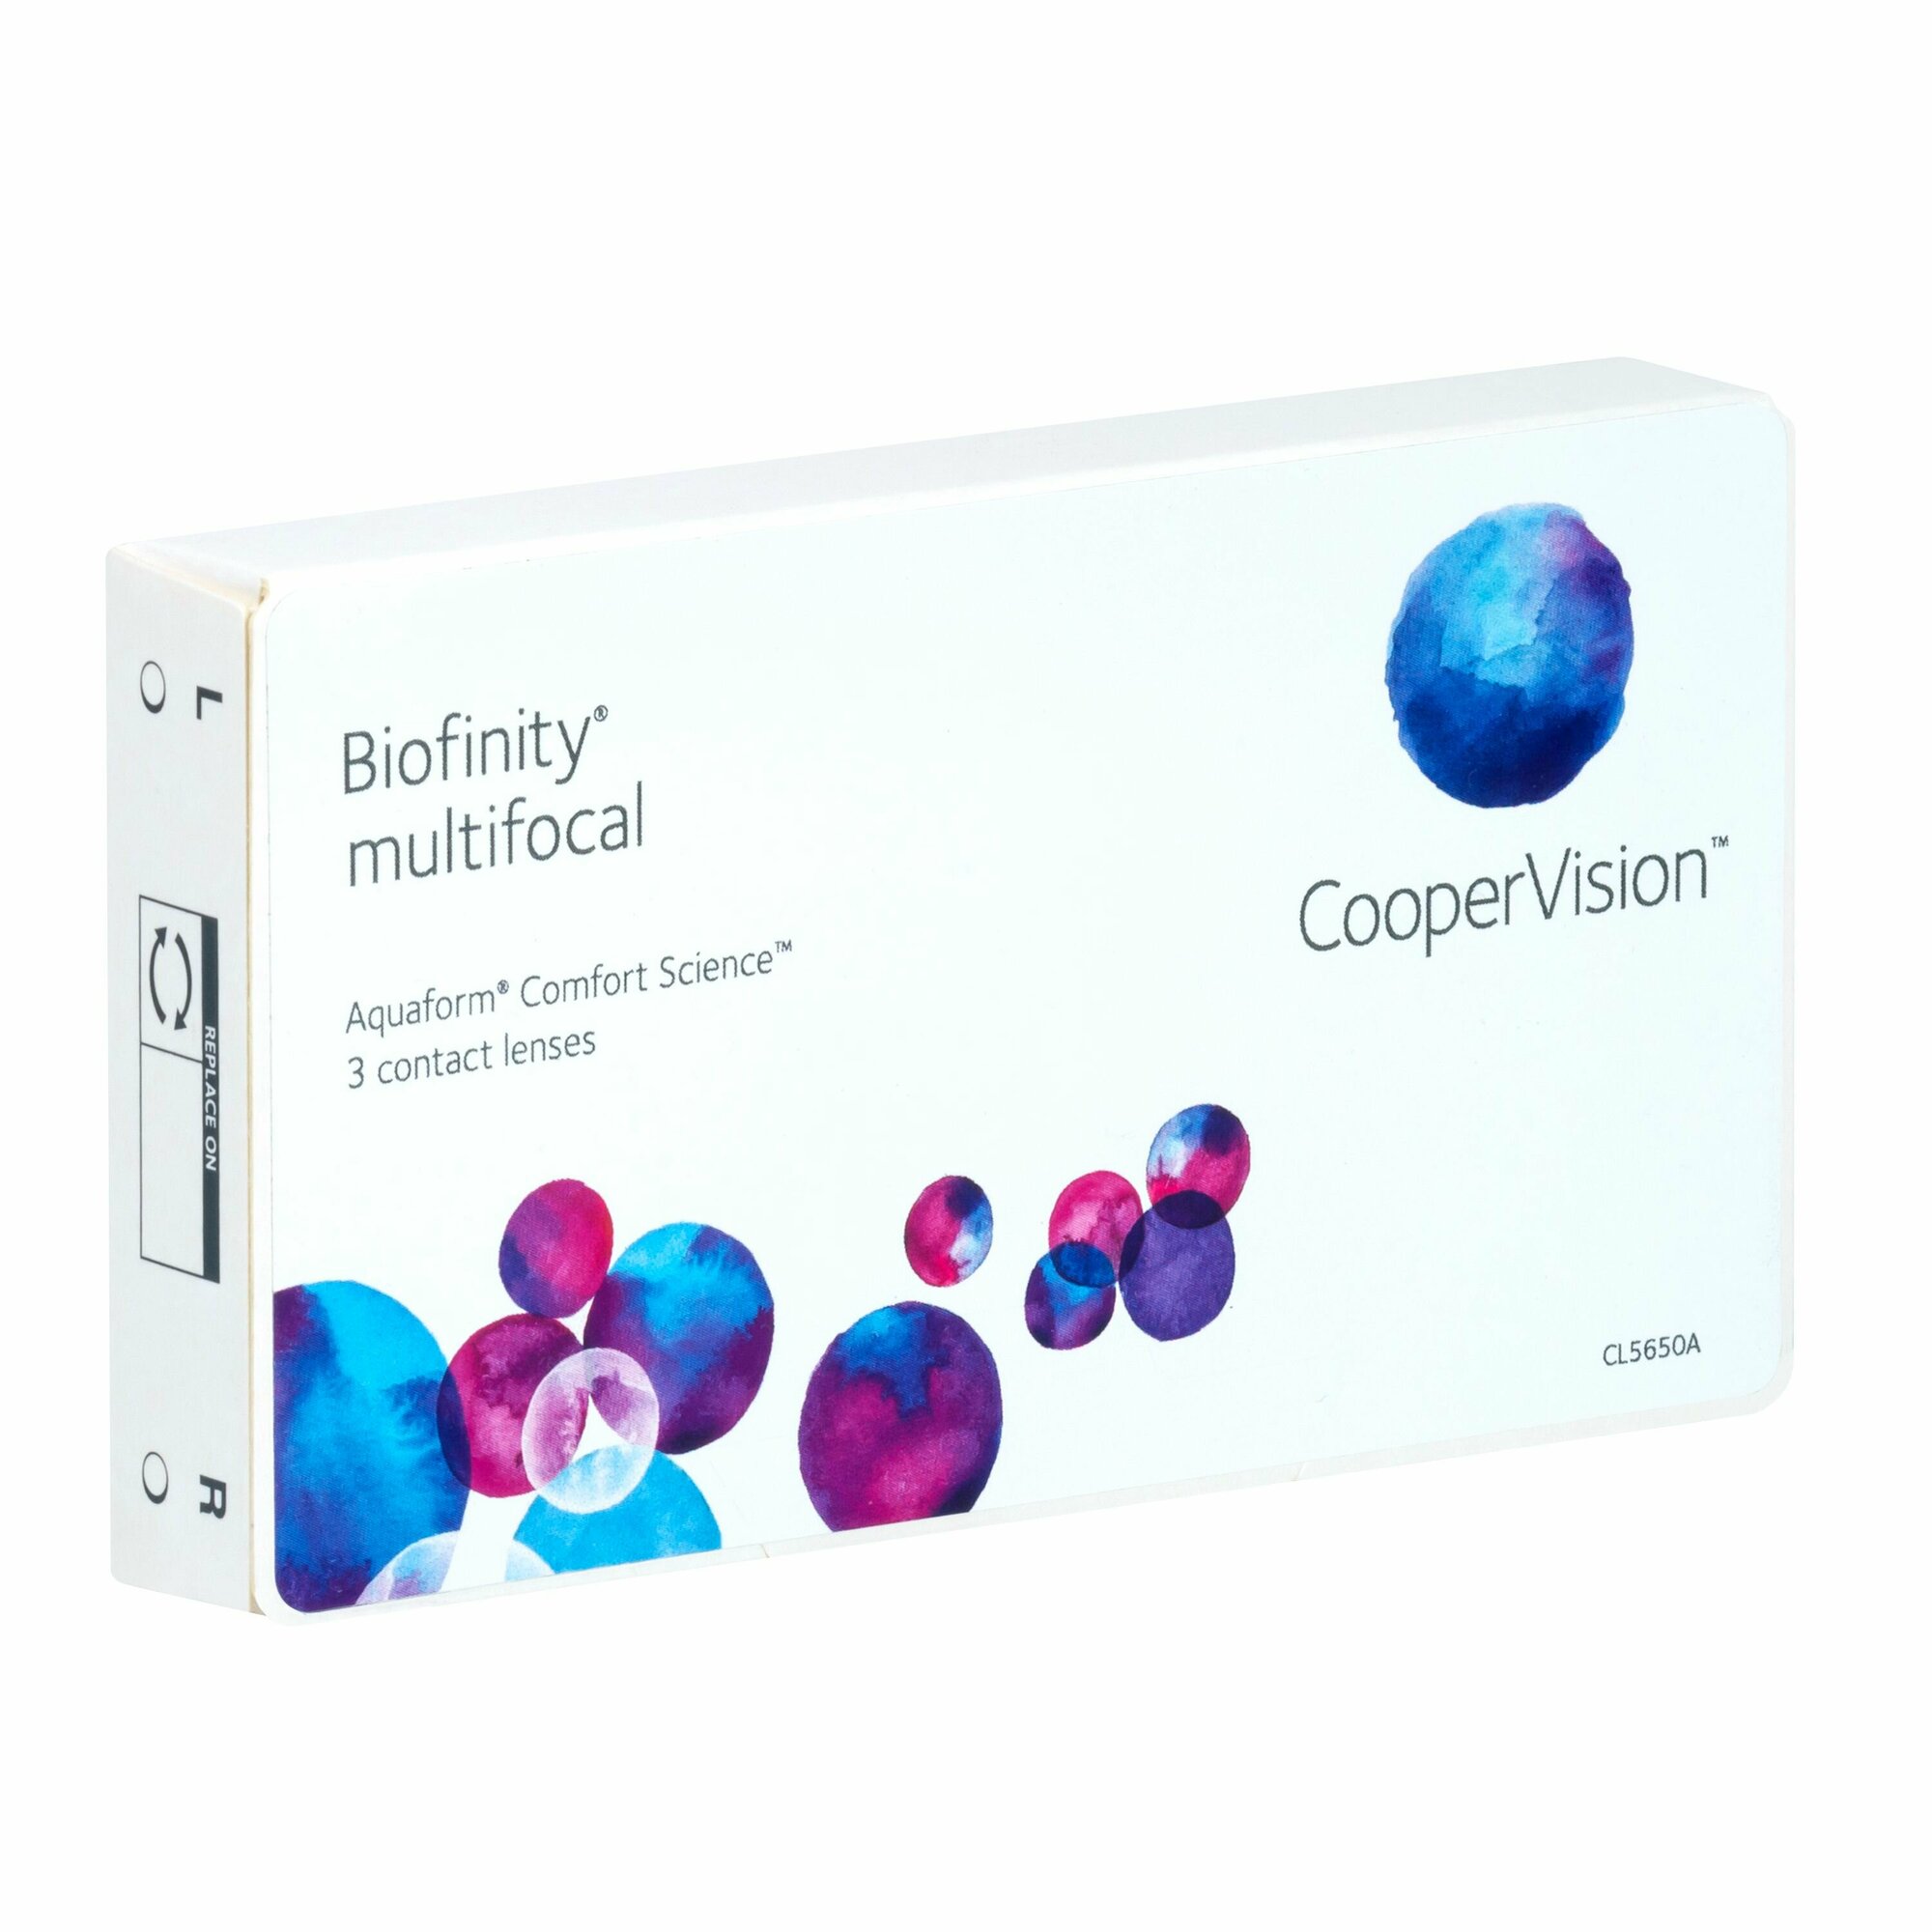 CooperVision Biofinity multifocal (3 линзы) ADD +2.50D -10.00 BC 8,6